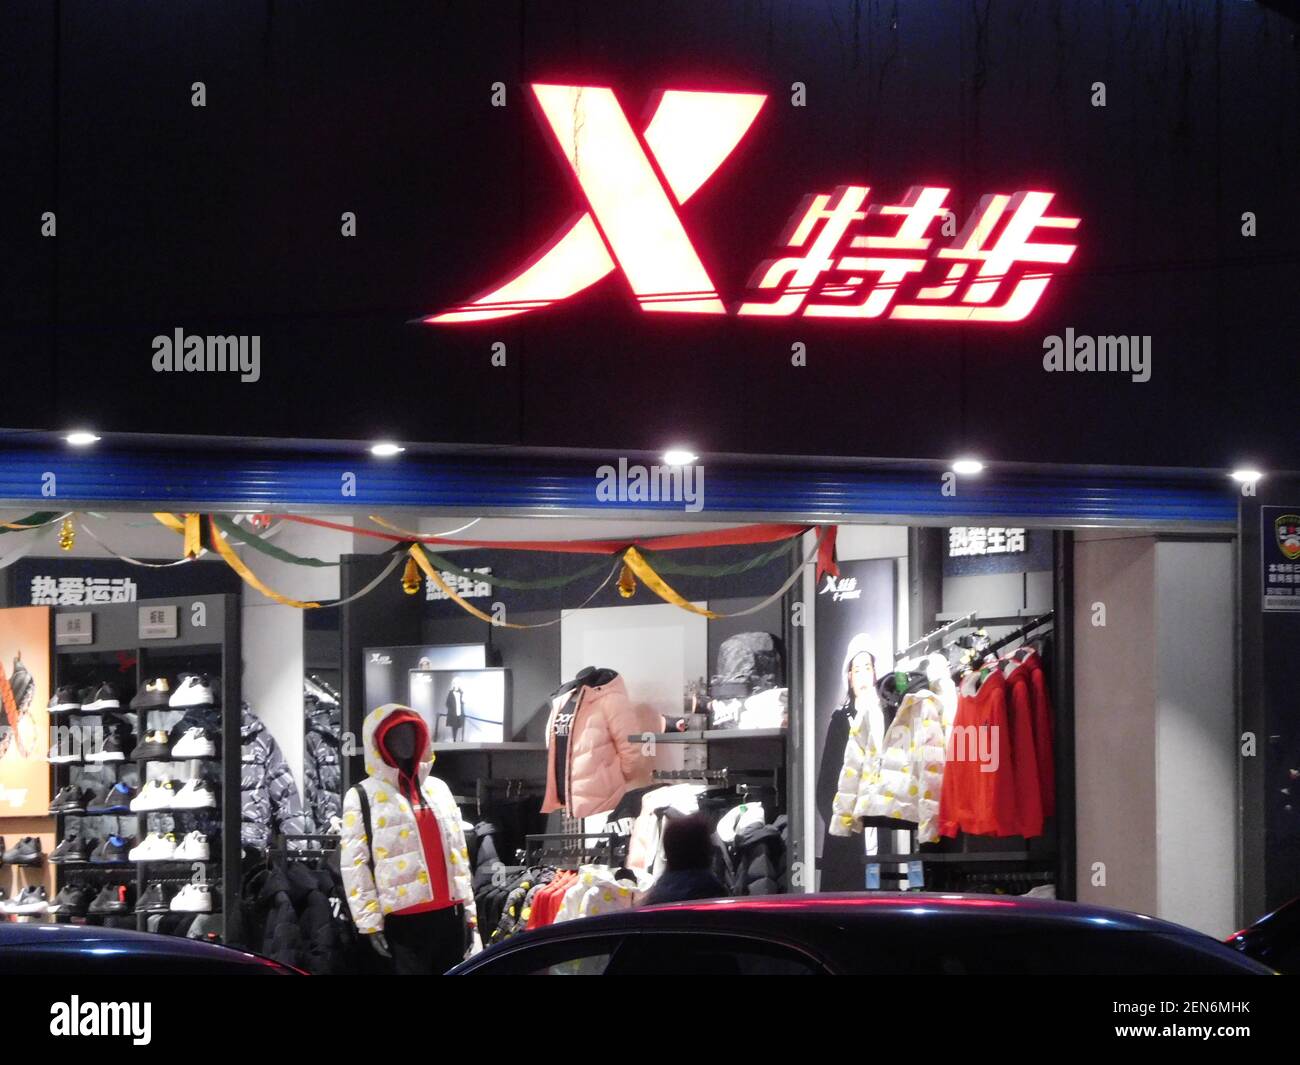 FILE--Vista de una tienda de la firma China de moda de ropa deportiva Xtep en Chongqing, China, 7 de enero de 2019. La firma China de deportiva de moda Xtep International